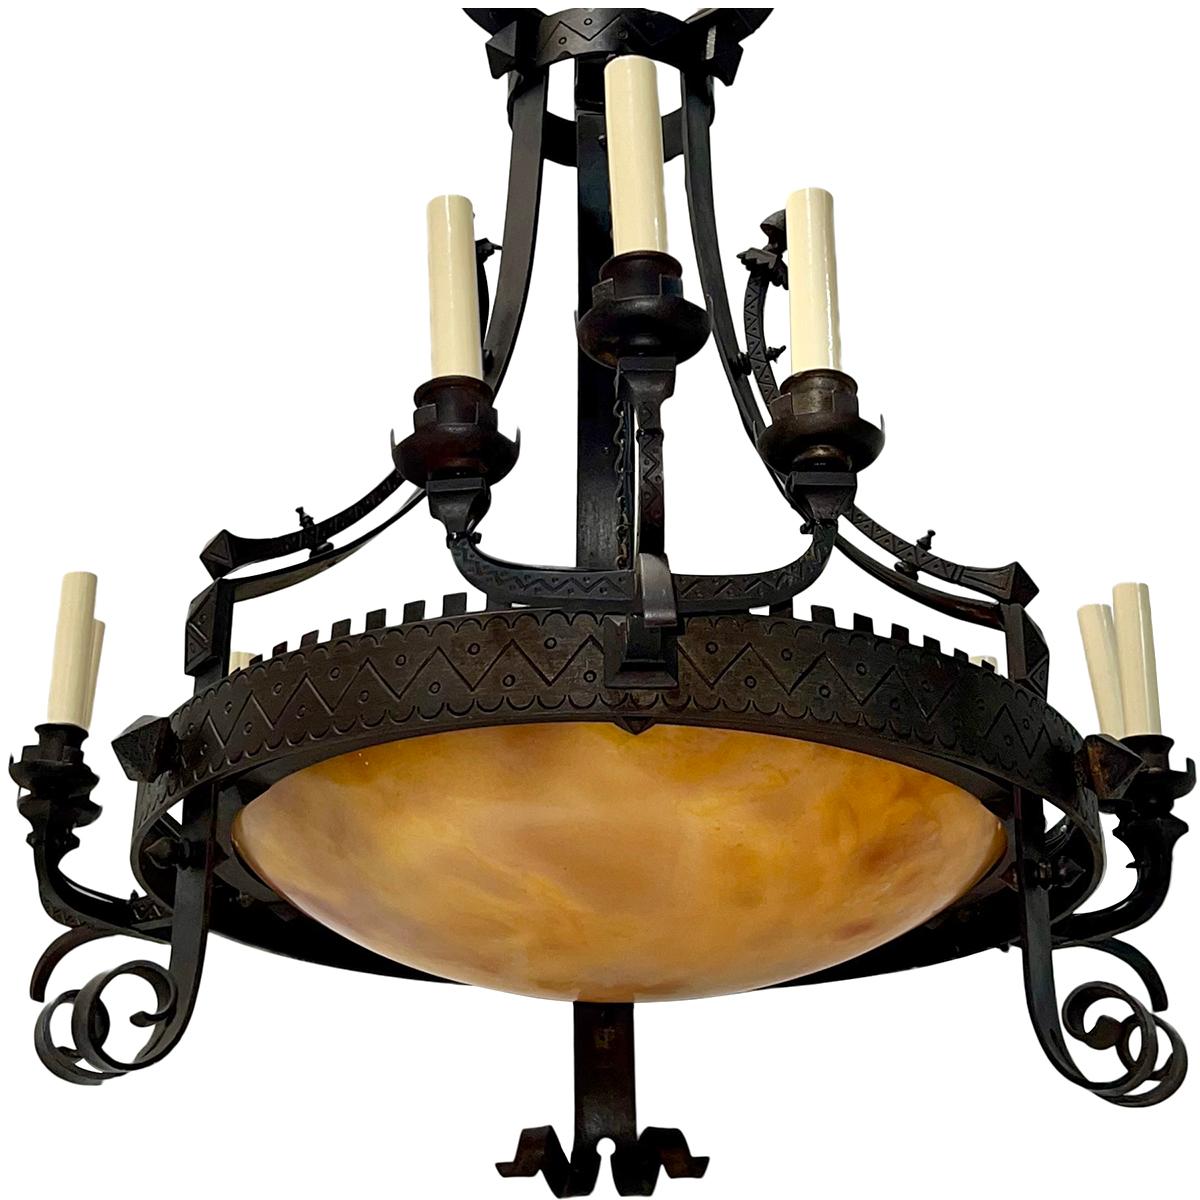 Circa 1910 Italian wrought iron chandelier with alabaster inset.

Measurements:
Height: 44.5″
Diameter: 30.5″